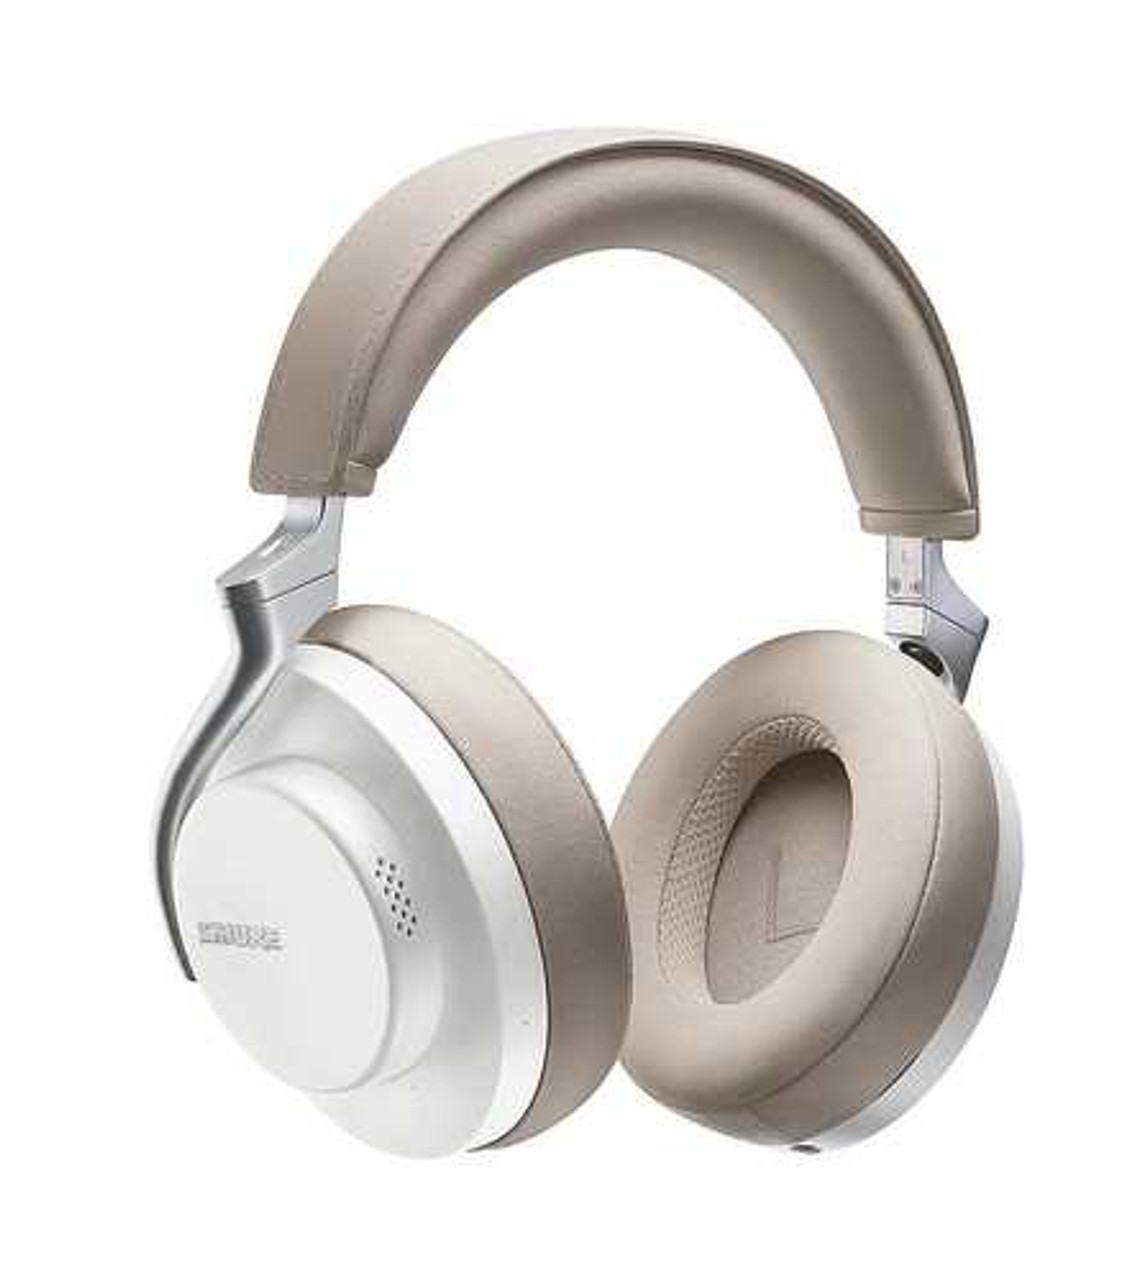 Shure - AONIC 50 Wireless Headphones - White